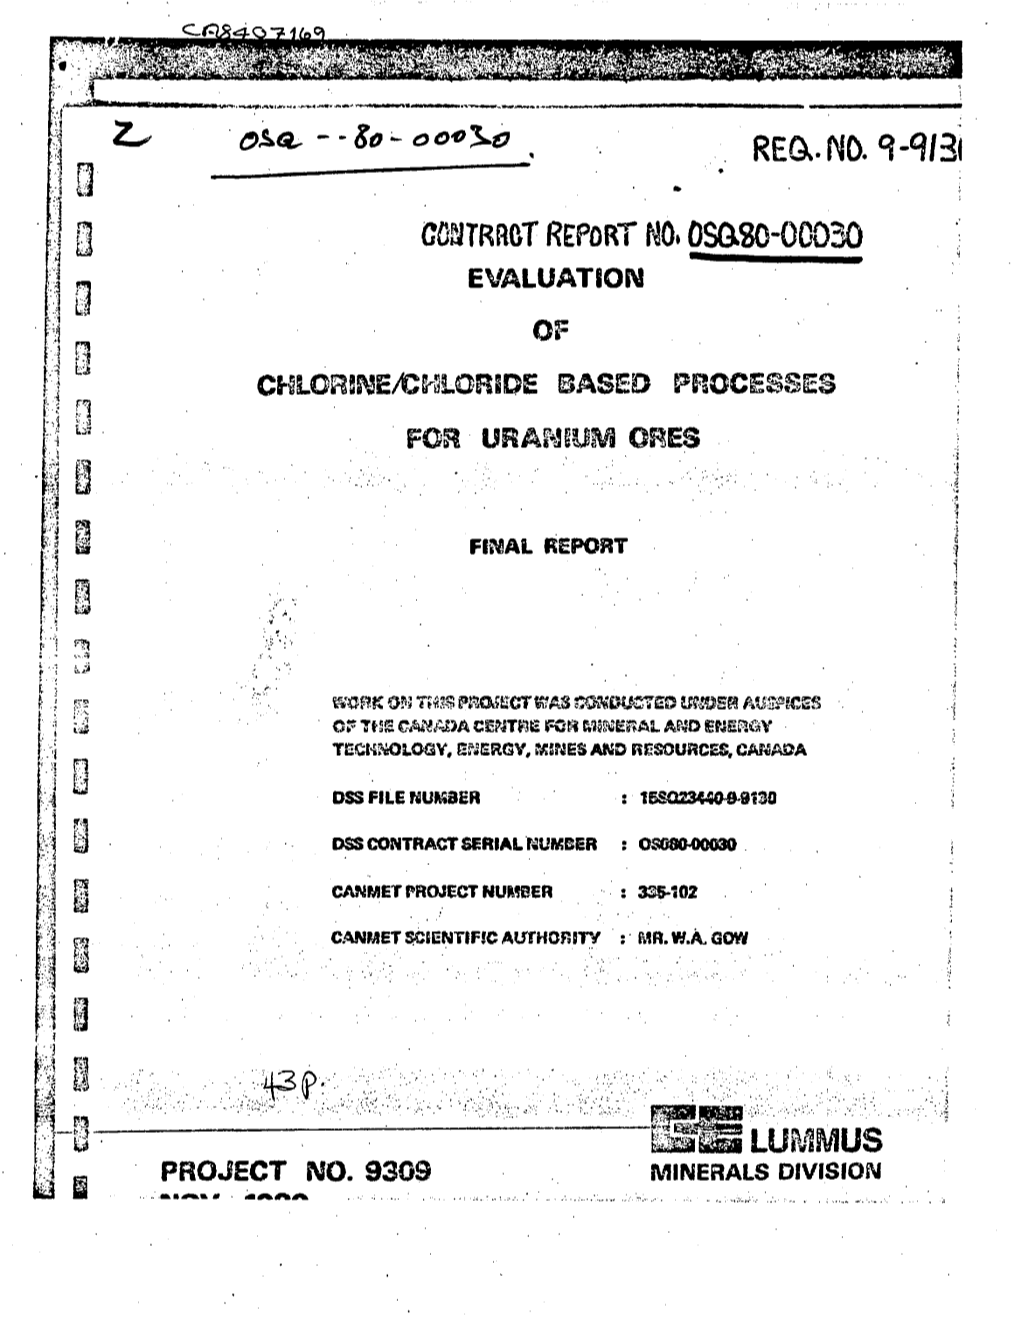 Chlorine/Chloride Based Processes for Uranium Ores"